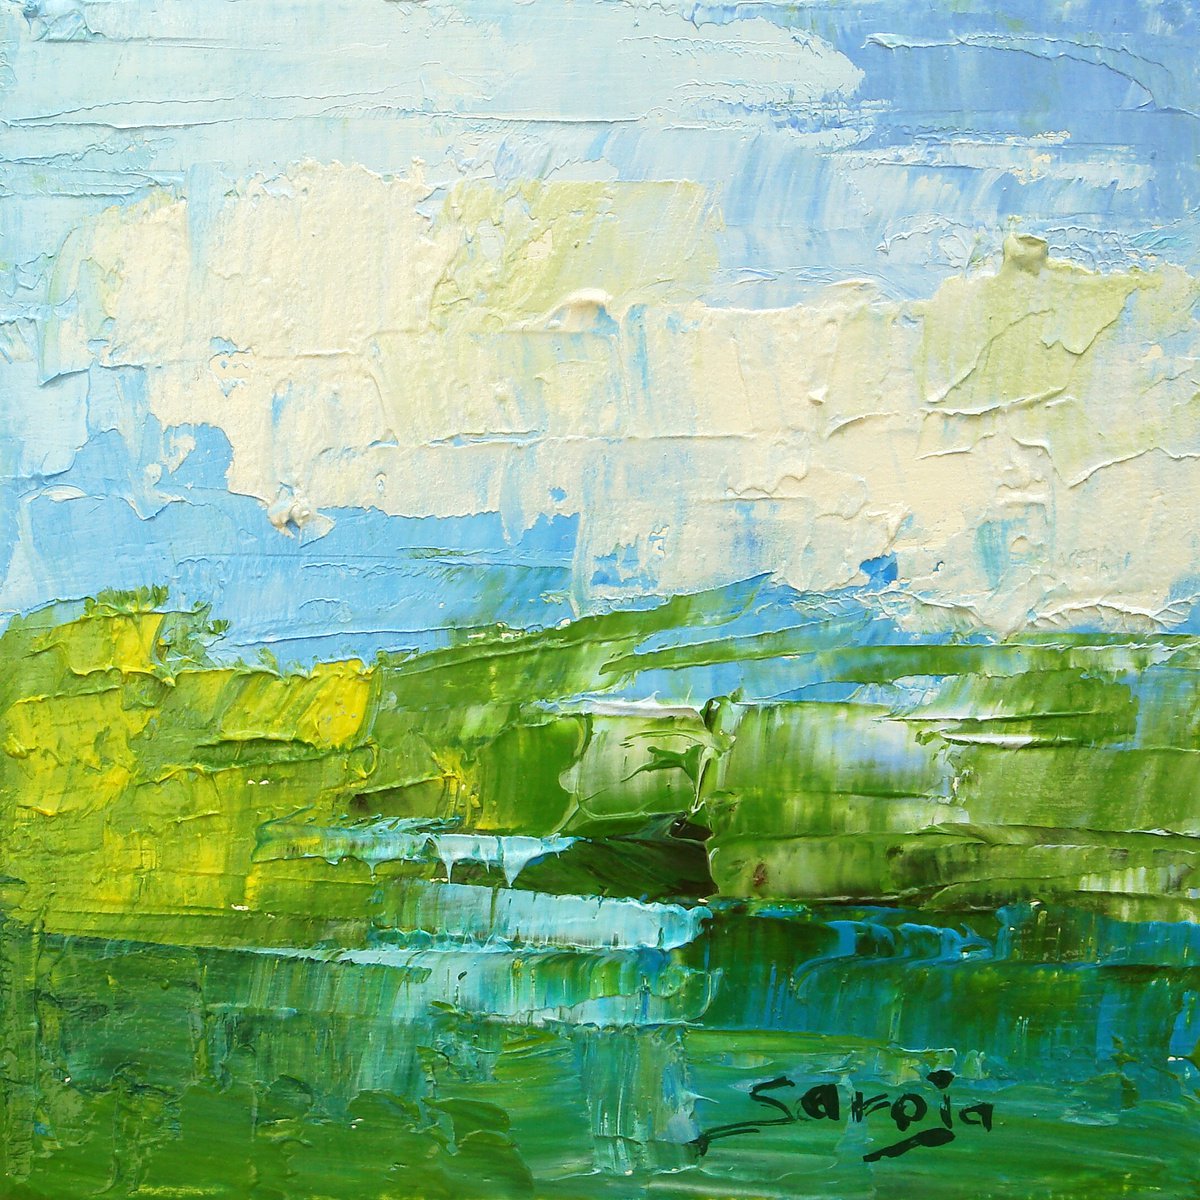 ref#:1153-10Q -10x10cm = 3.94 x 3.94 - nfr. Green landscape 3 by Saroja La Colorista